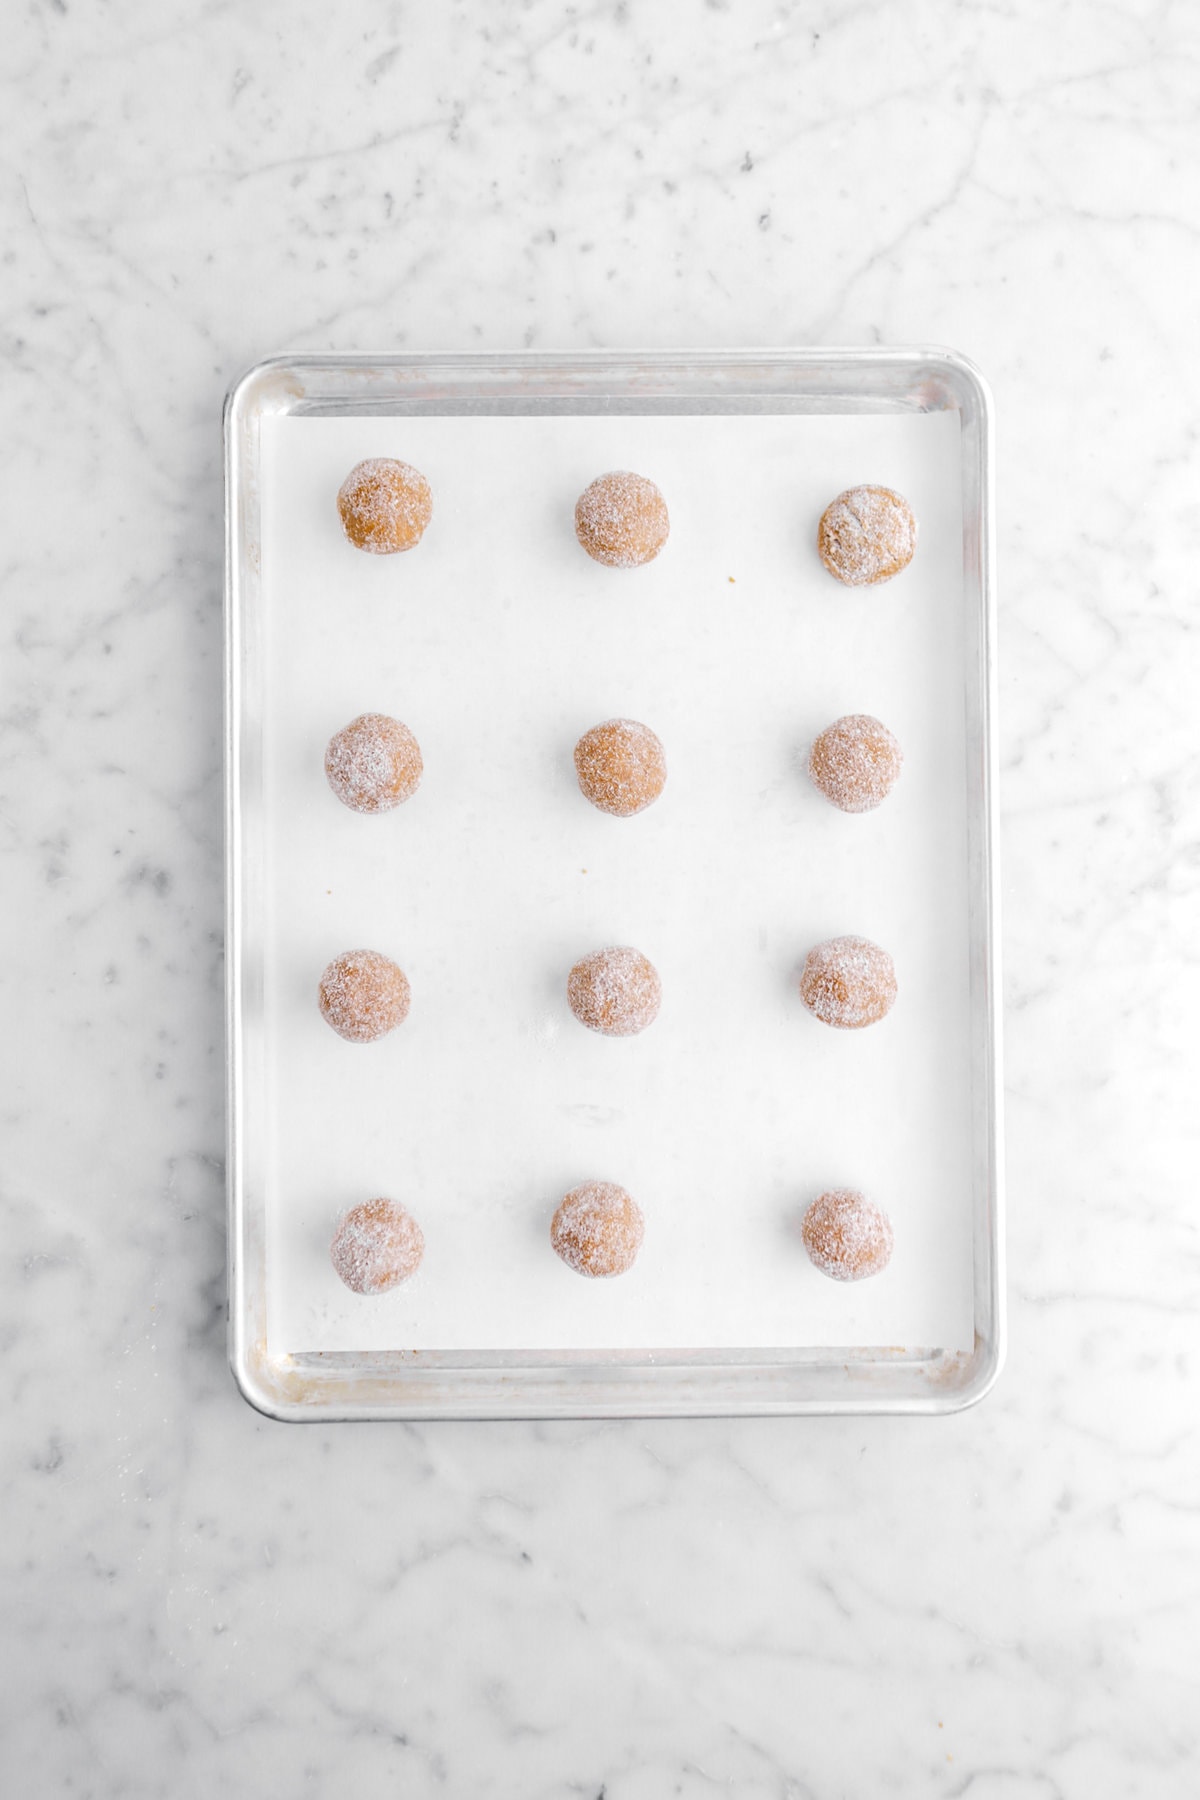 twelve cookie dough balls on parchment lined sheet pan.